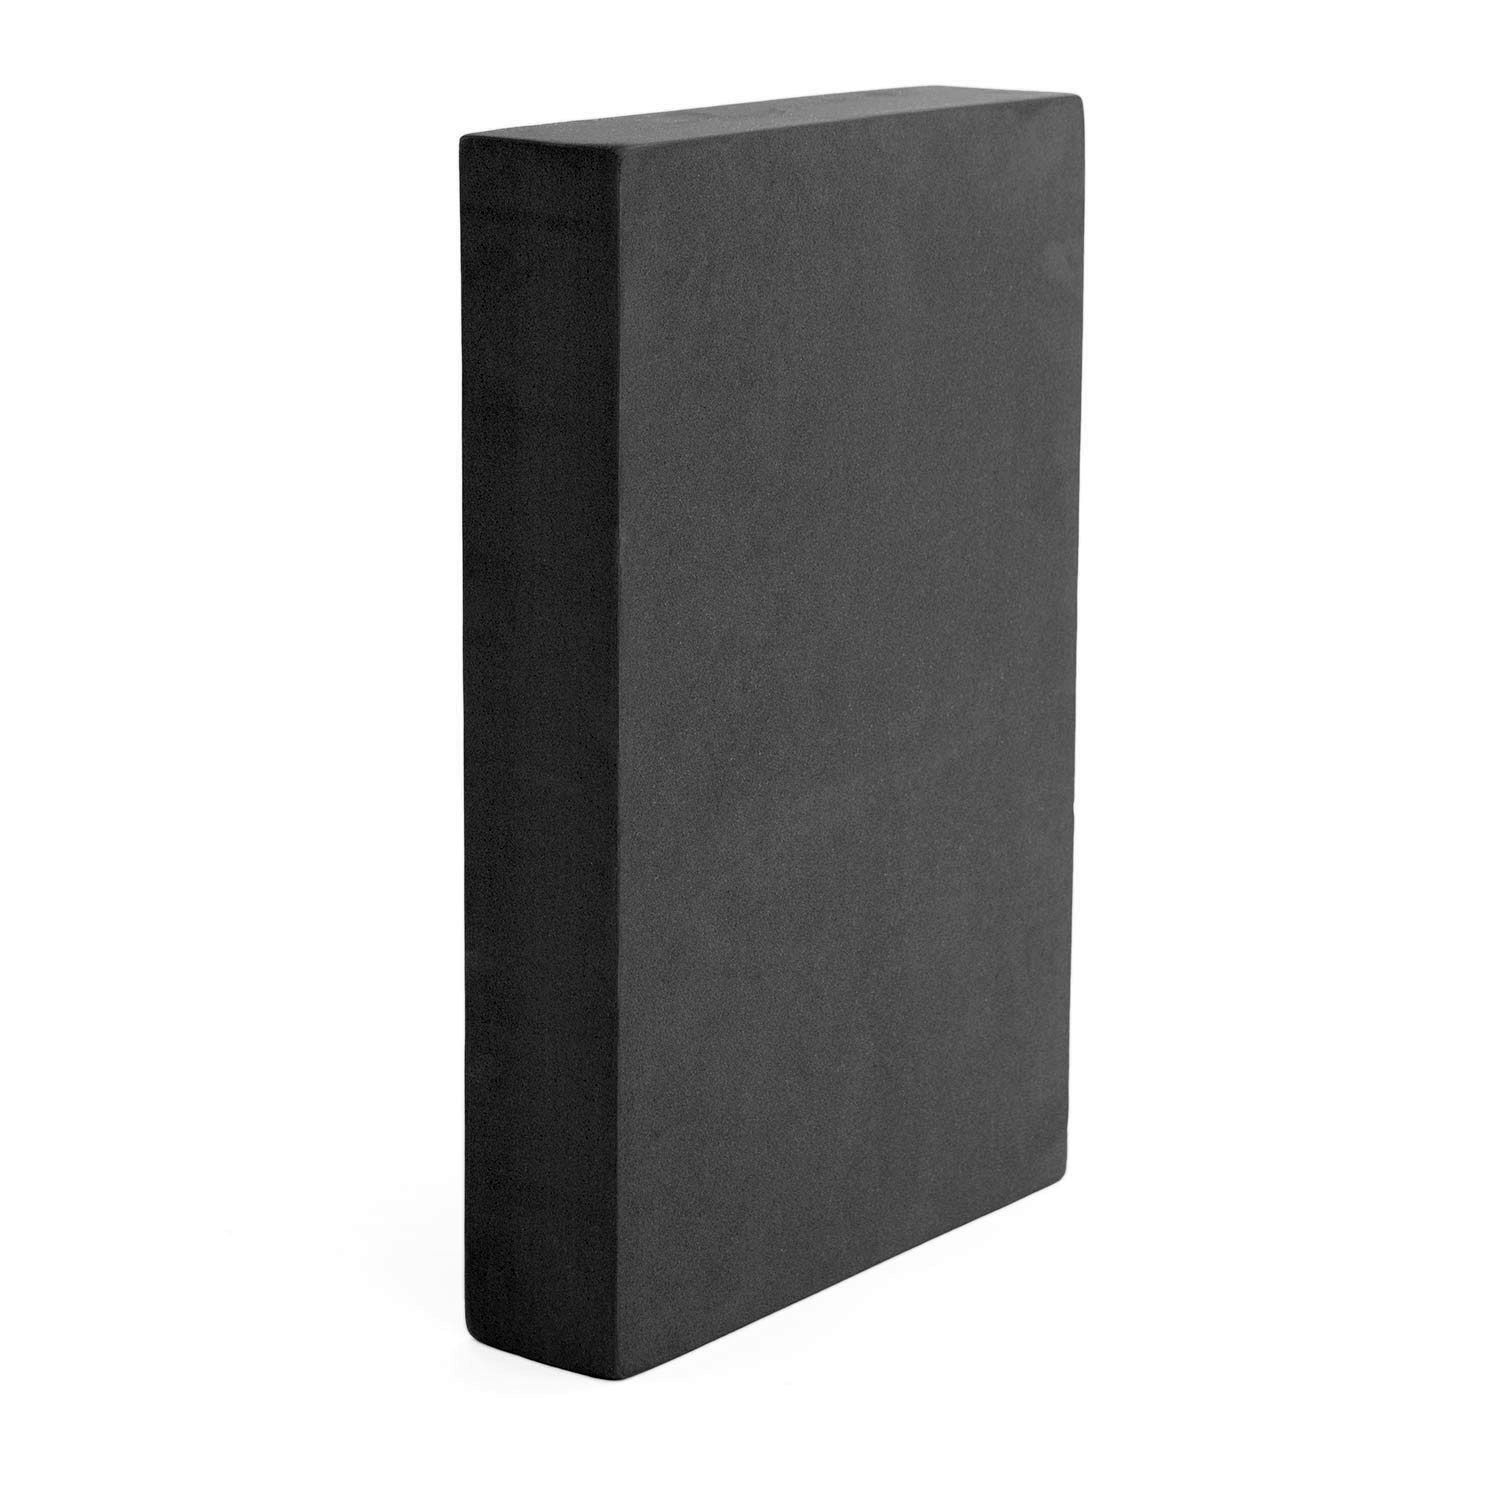 Schulterstandplatte Asana Block (Platte) schwarz, EVA schaum, 920-S